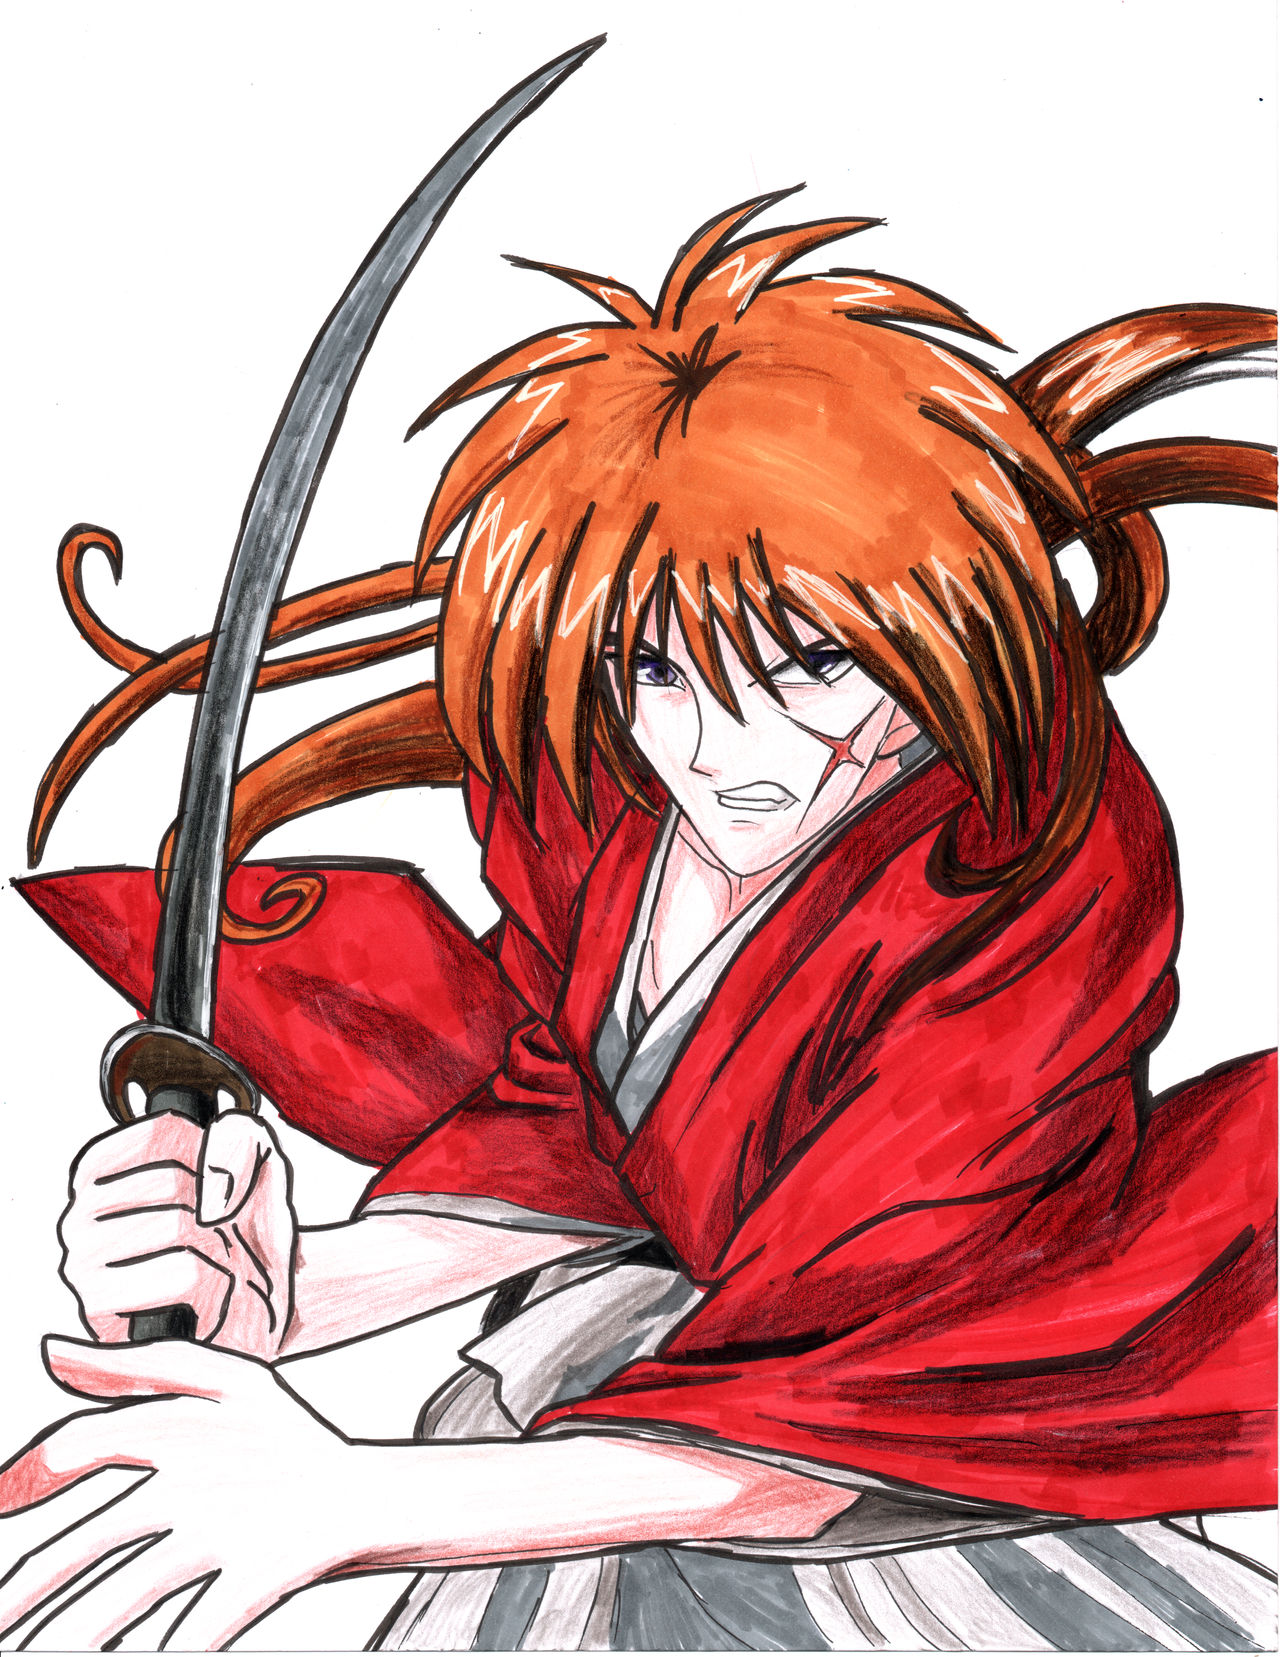 Kenshin Himura - Rigged by JosouKitsune on DeviantArt